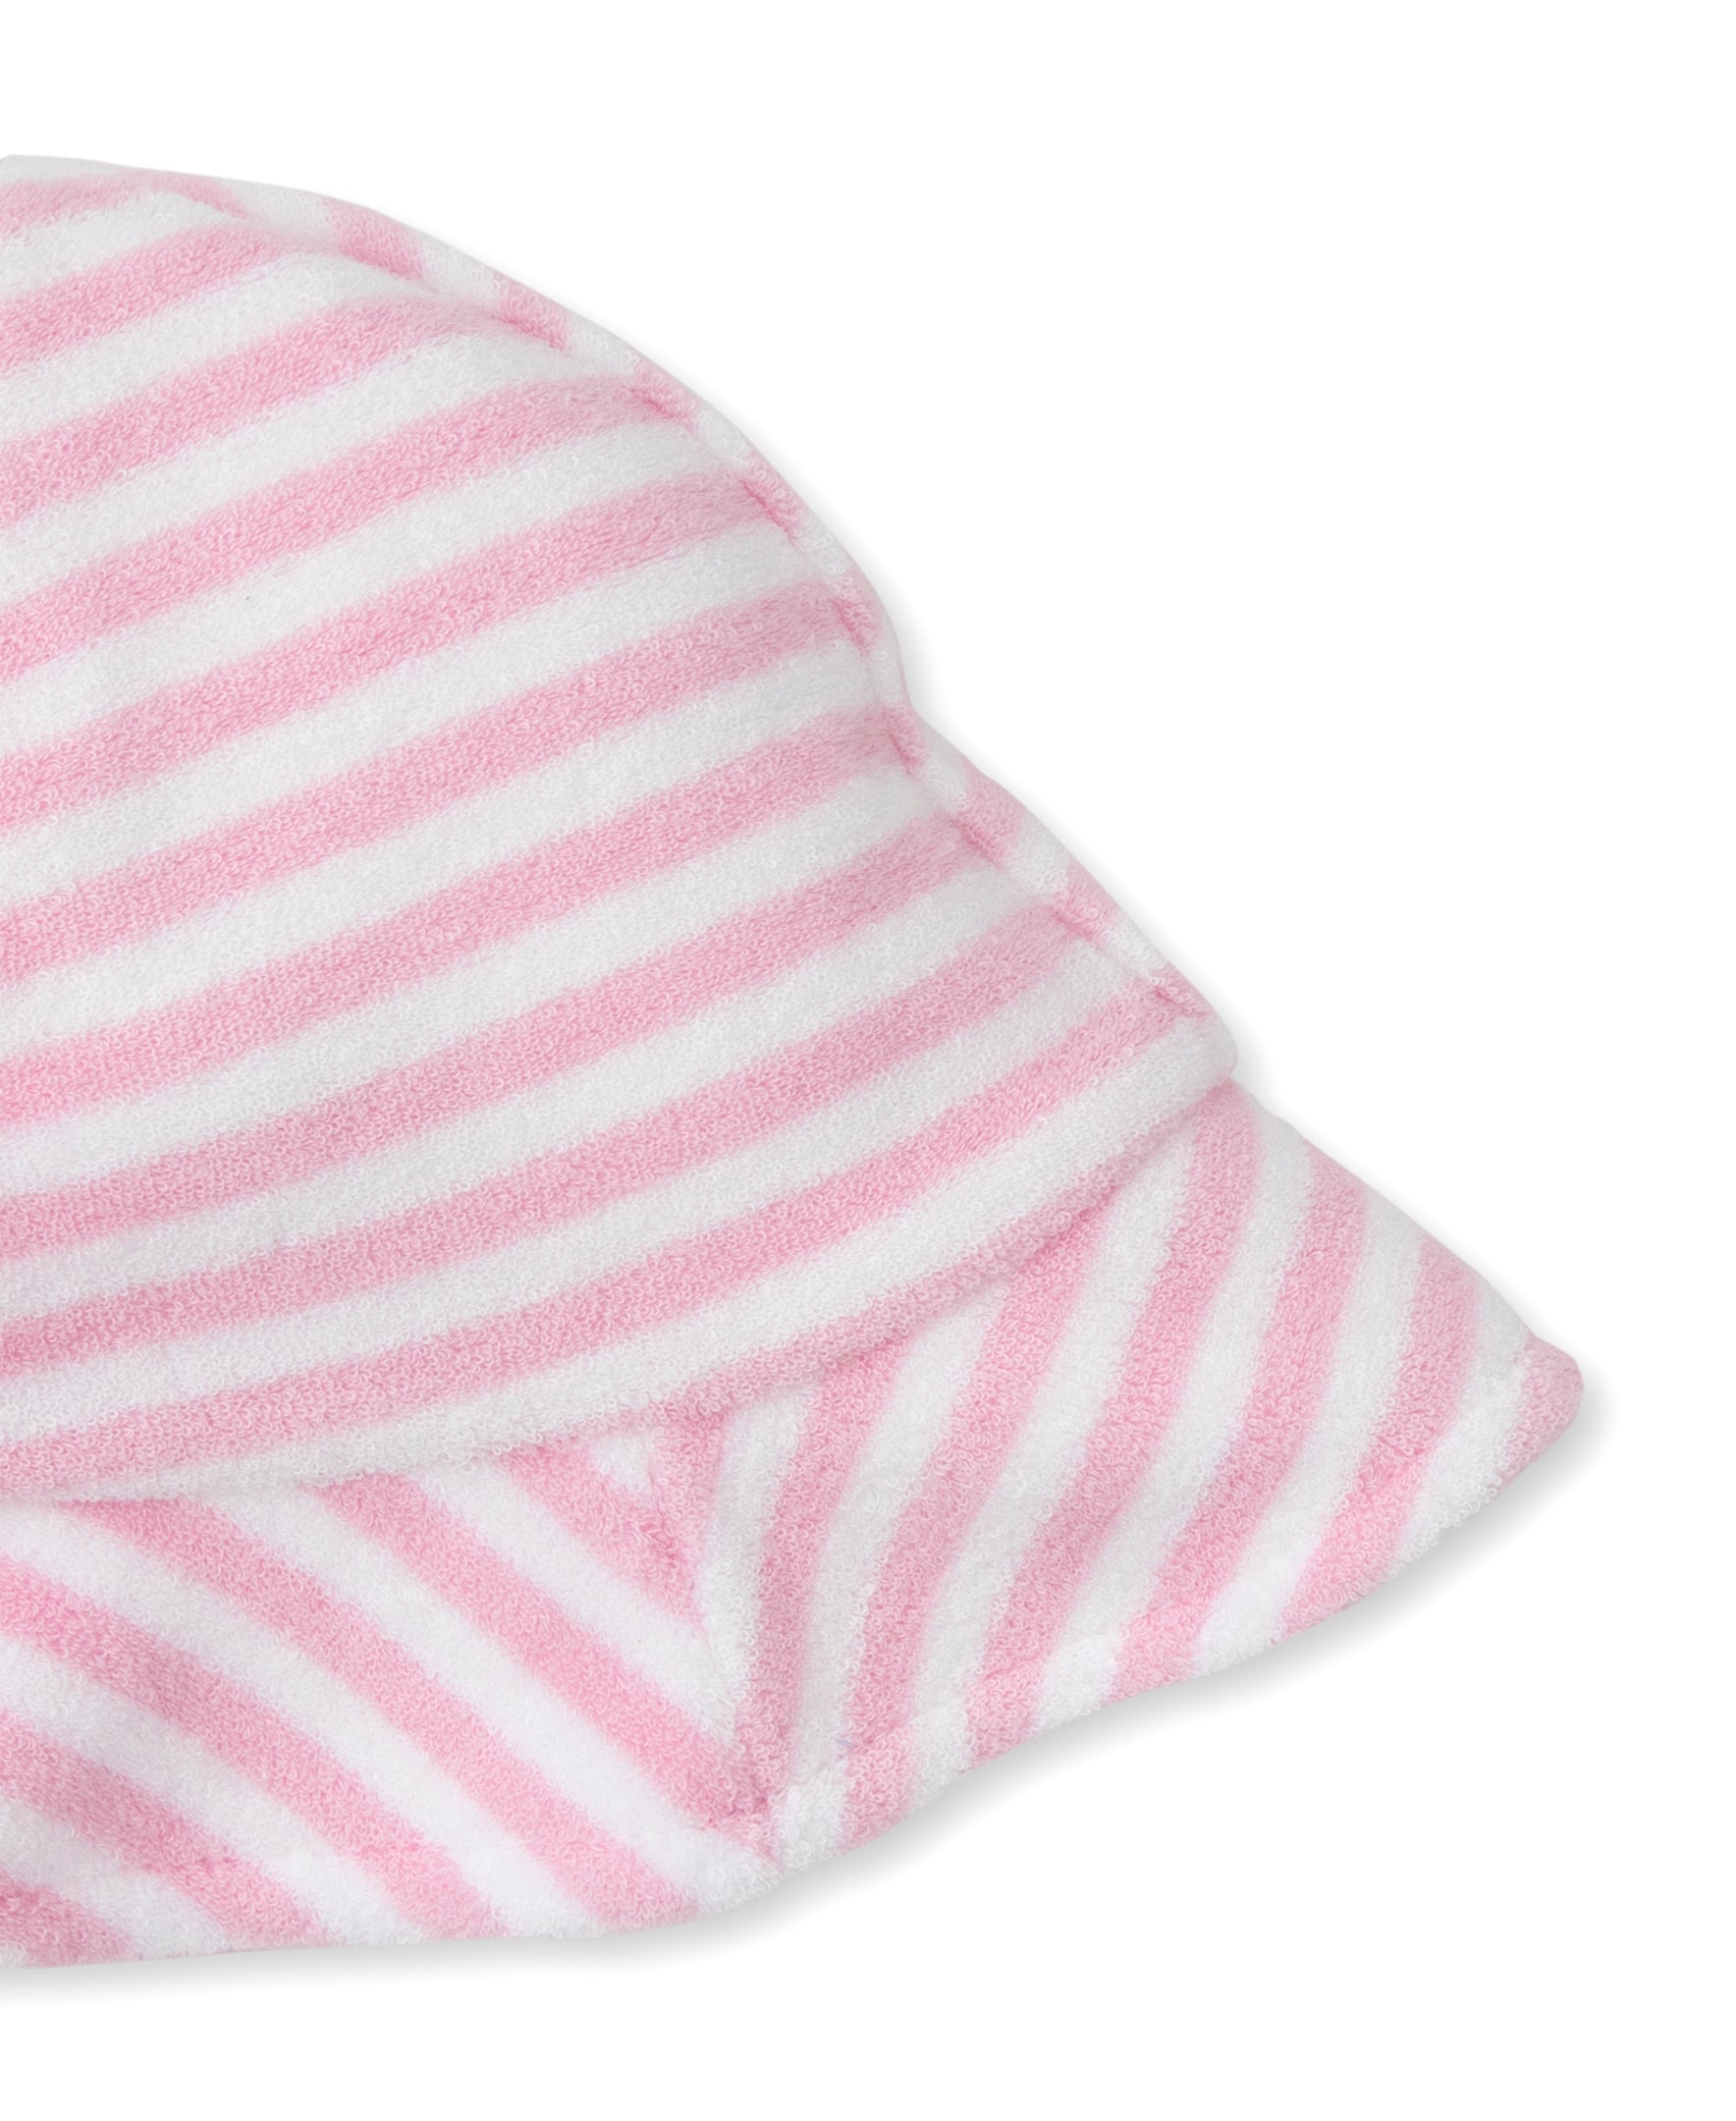 Cabana Terry Stripes Light Pink Sunhat - Kissy Kissy